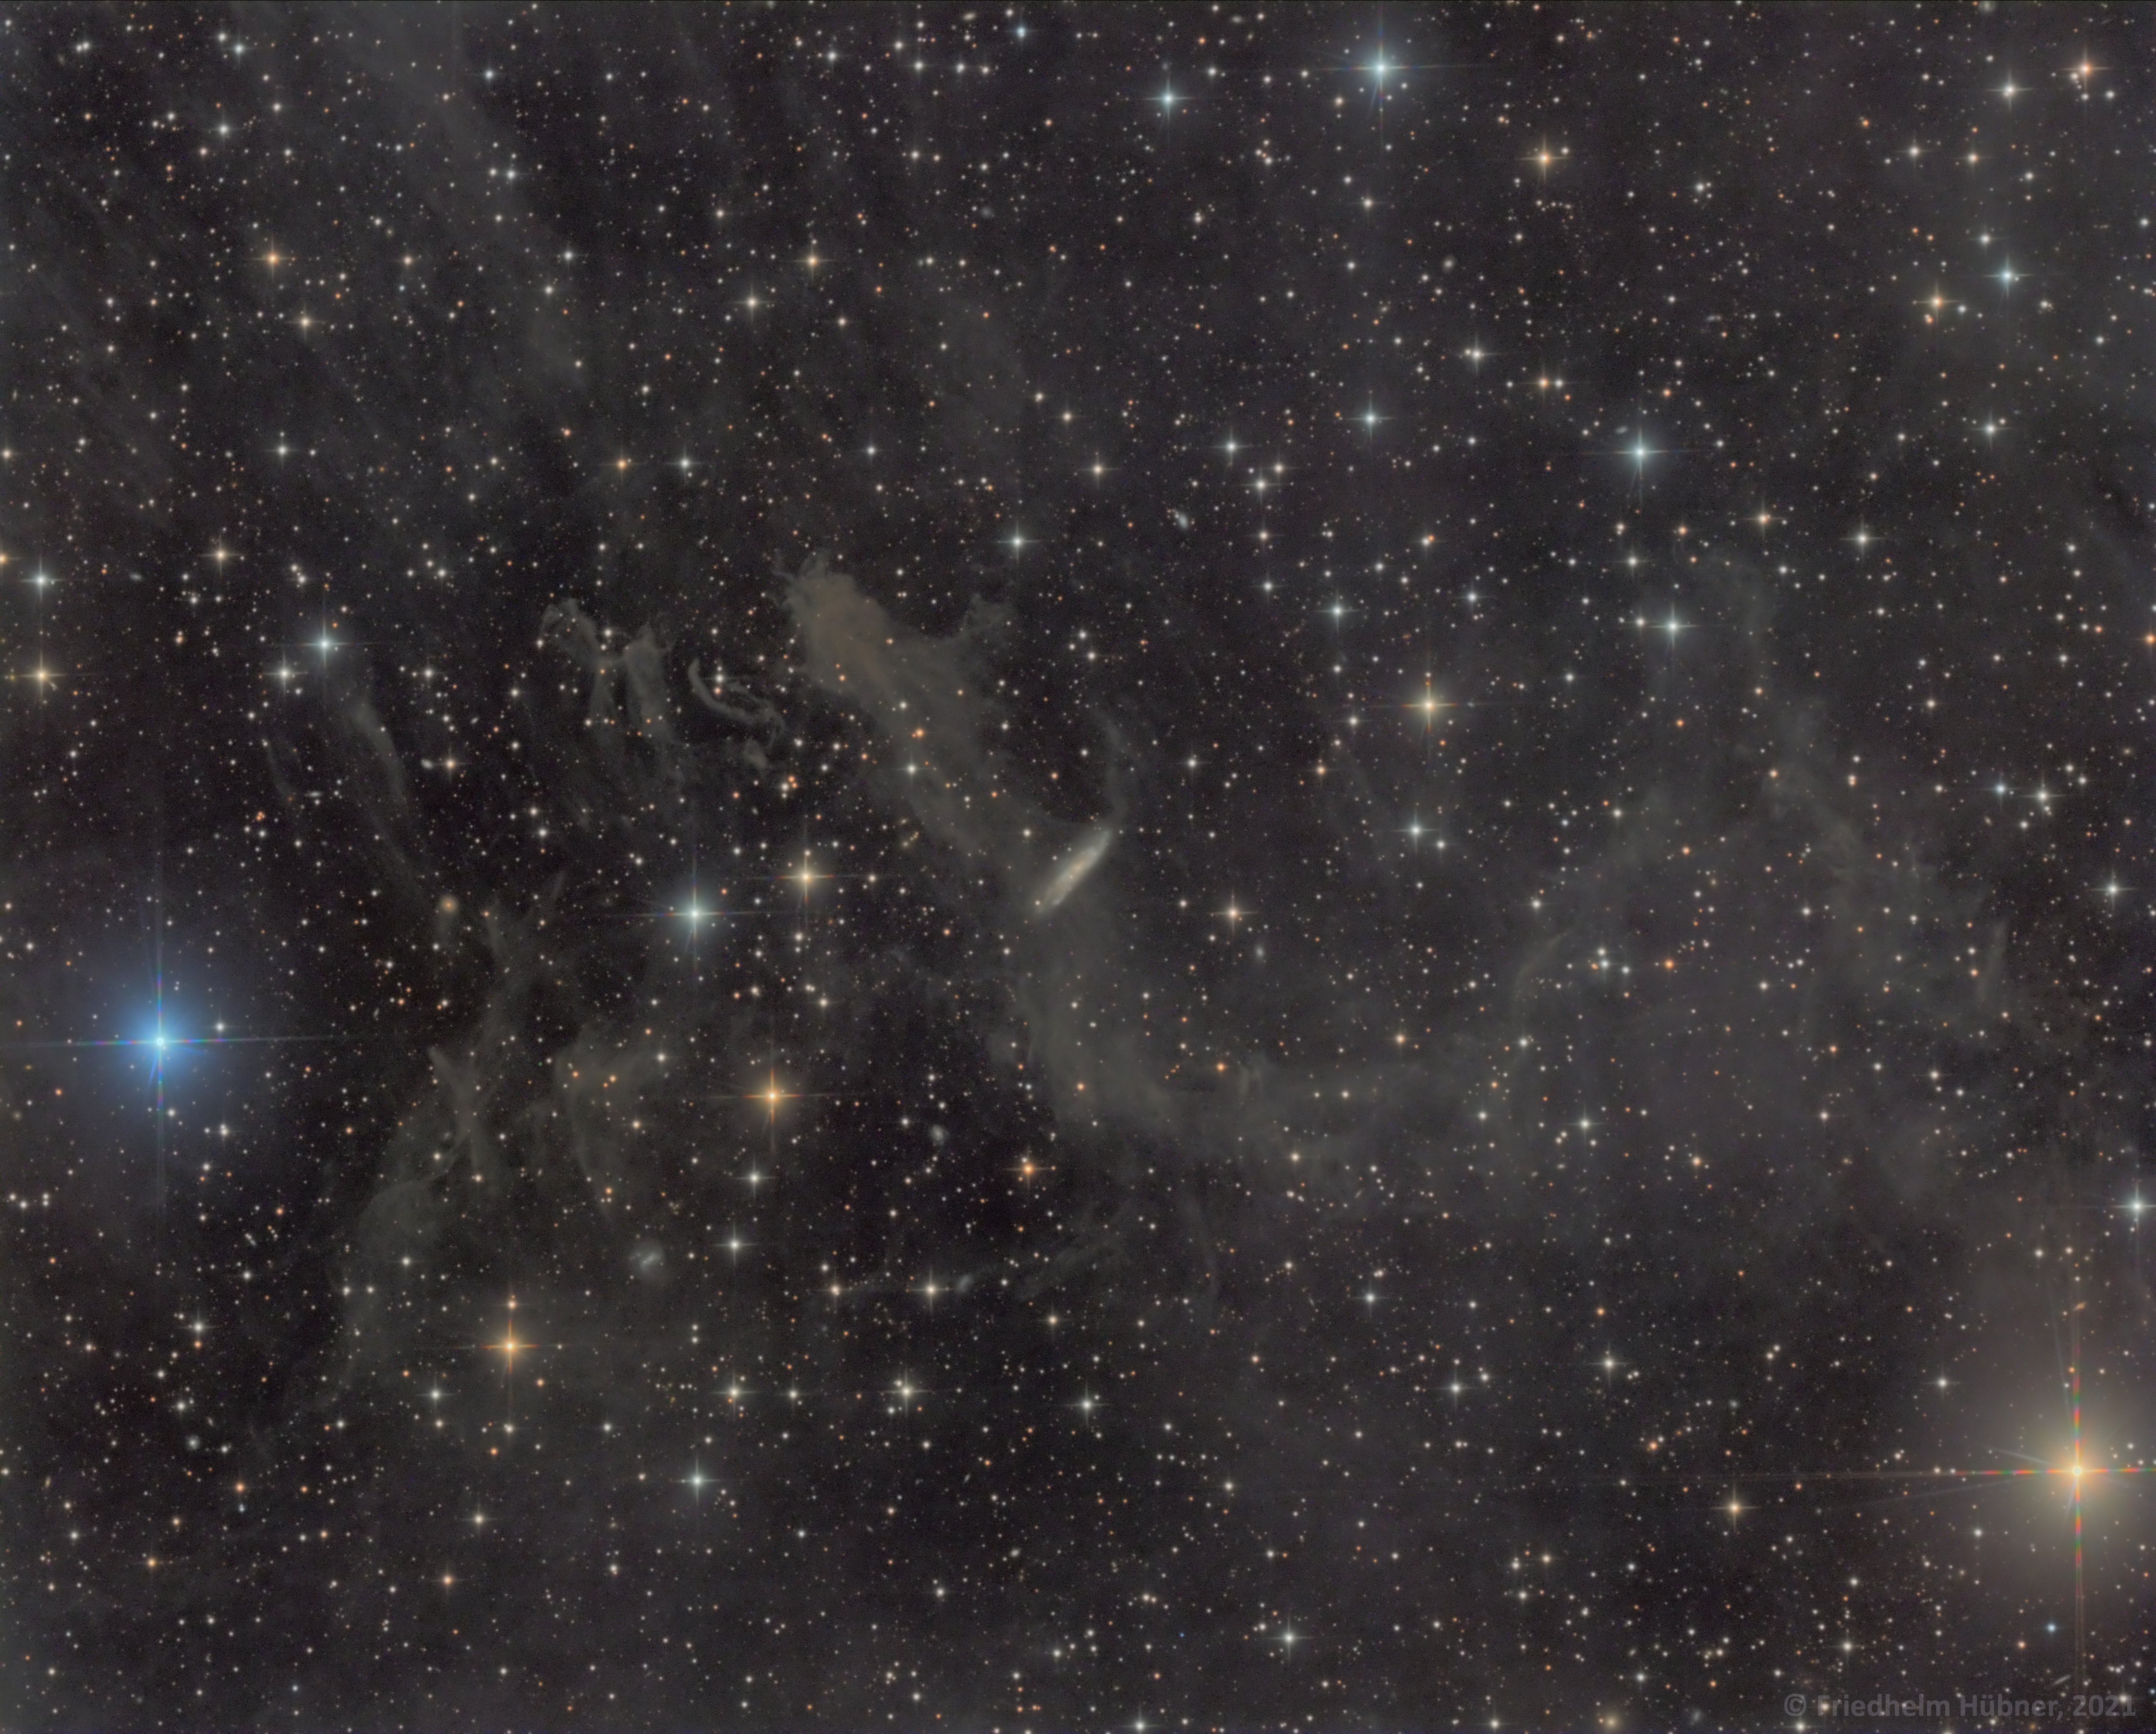 NGC7497 und IFN (Peg)